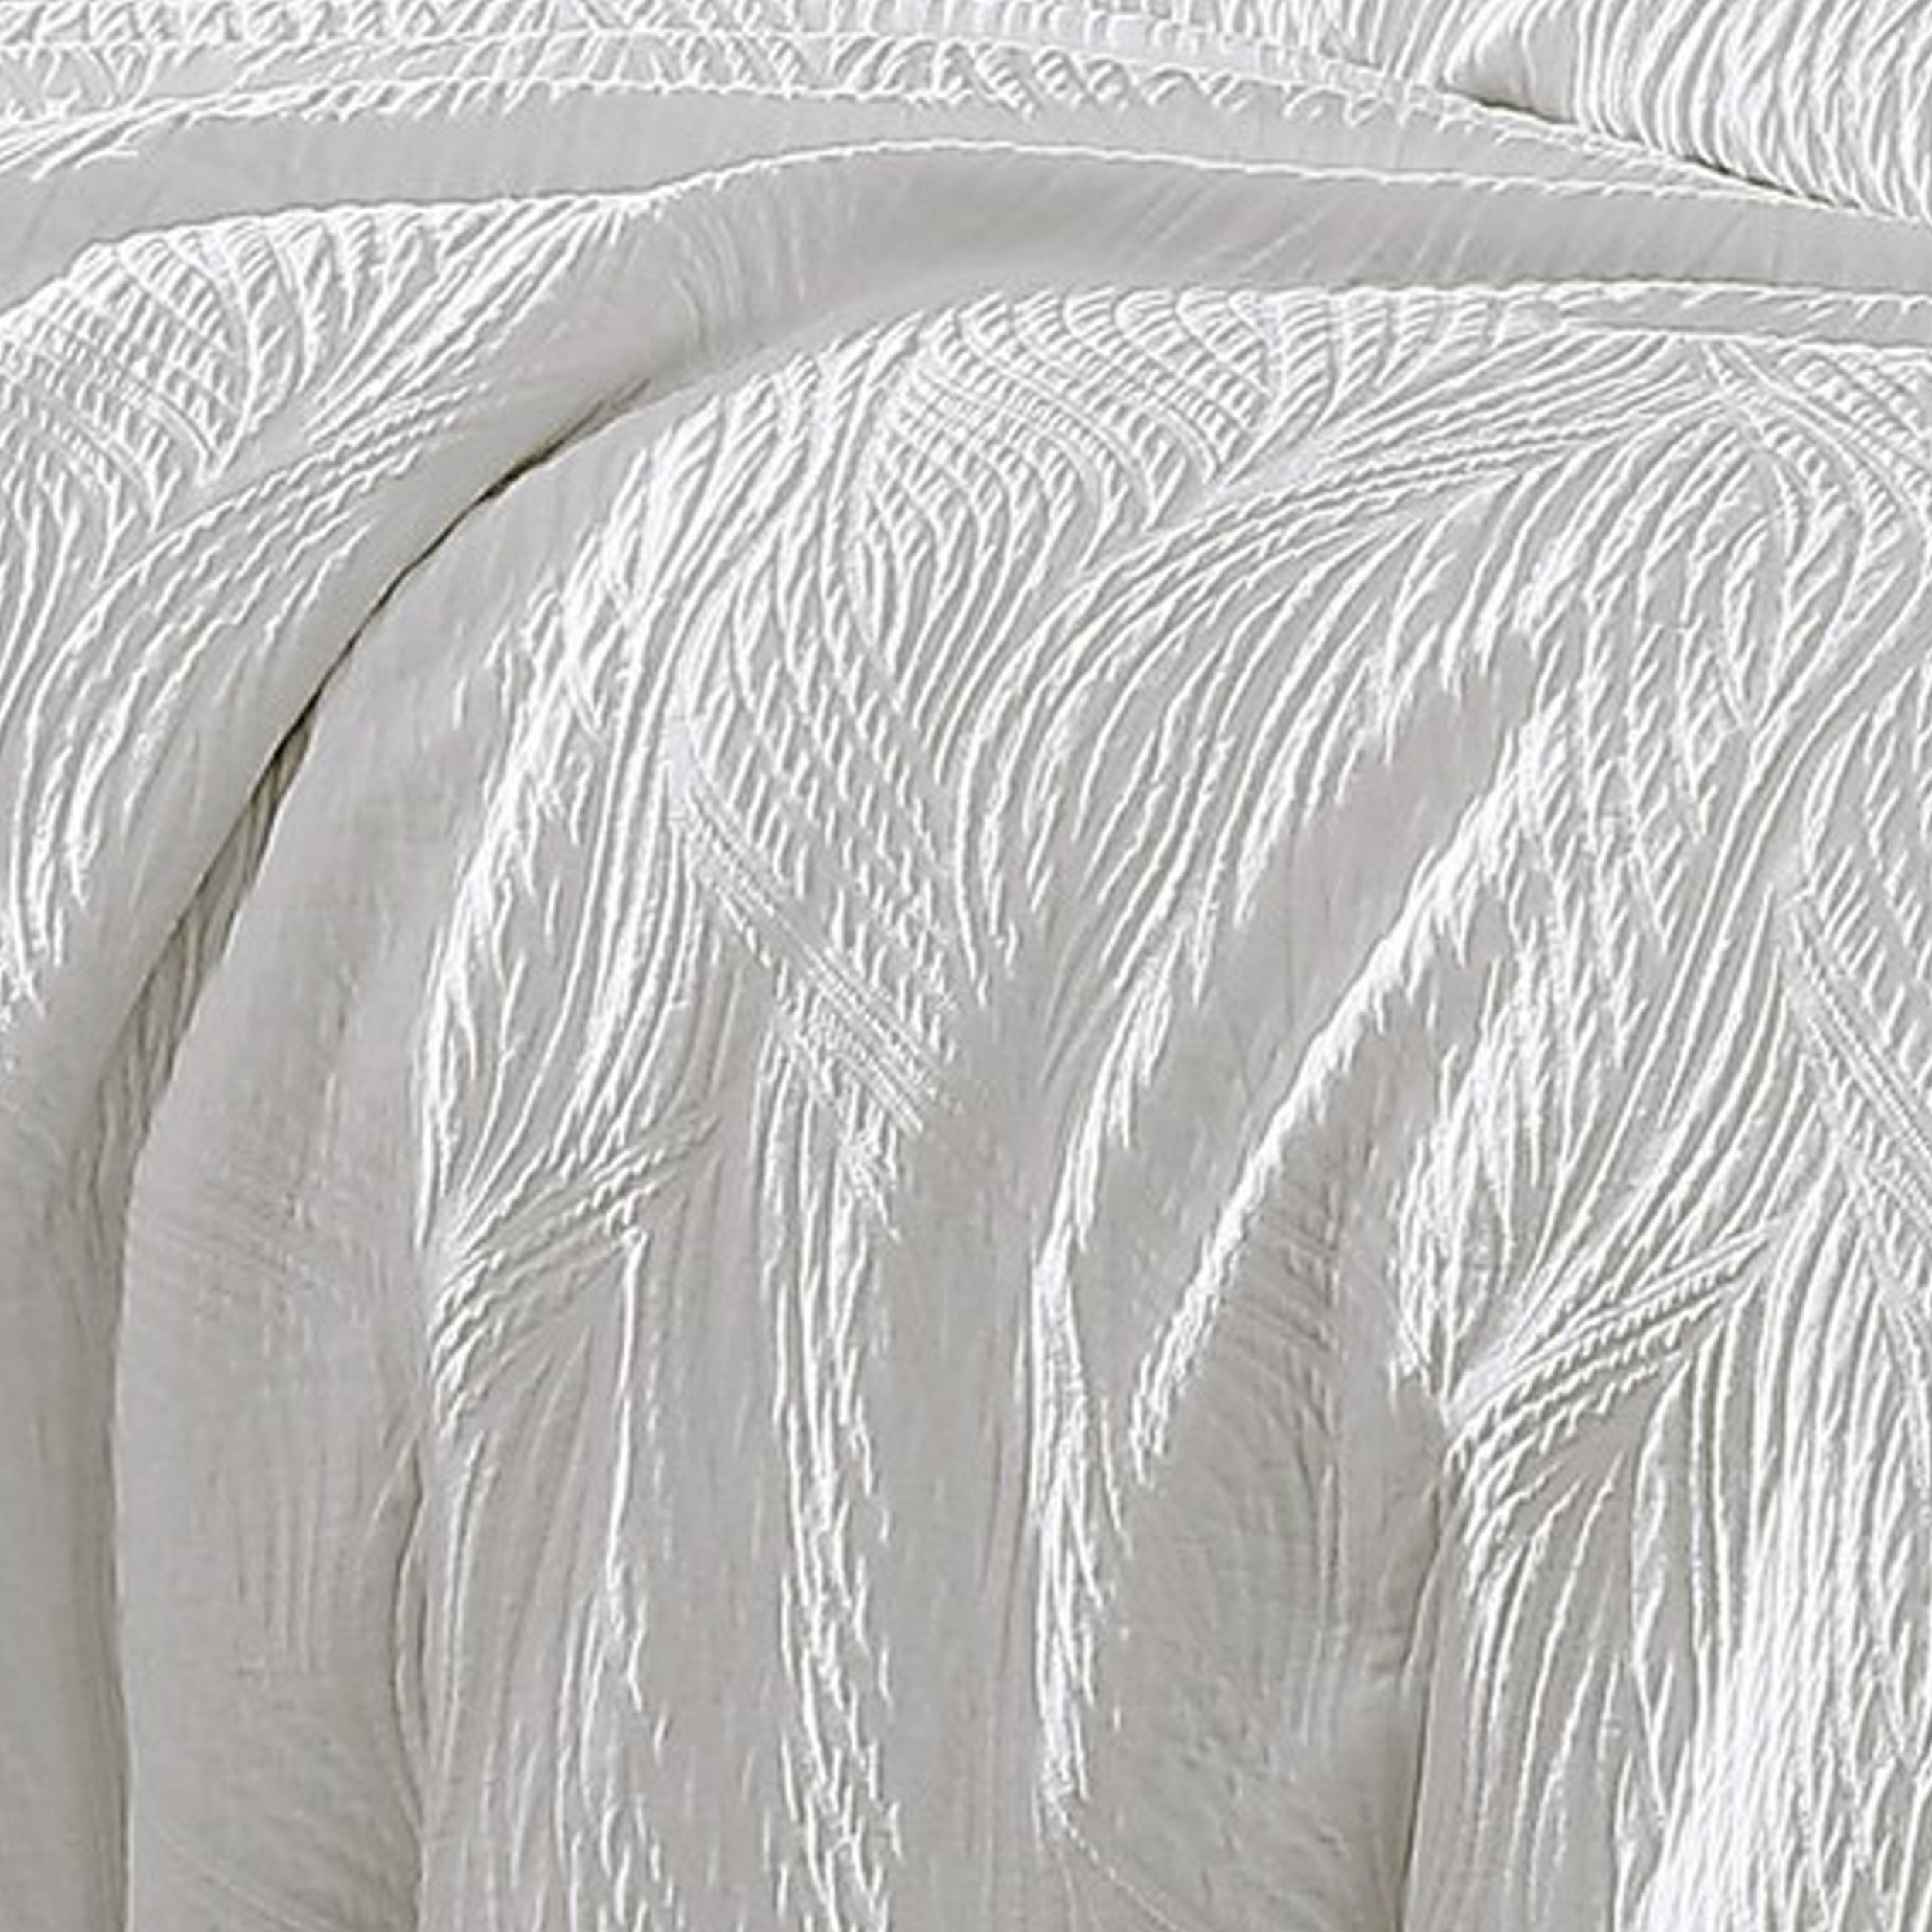 Levi 4 Piece King Duvet Comforter Set, White Wavy Matelasse Woven Cotton - Saltoro Sherpi